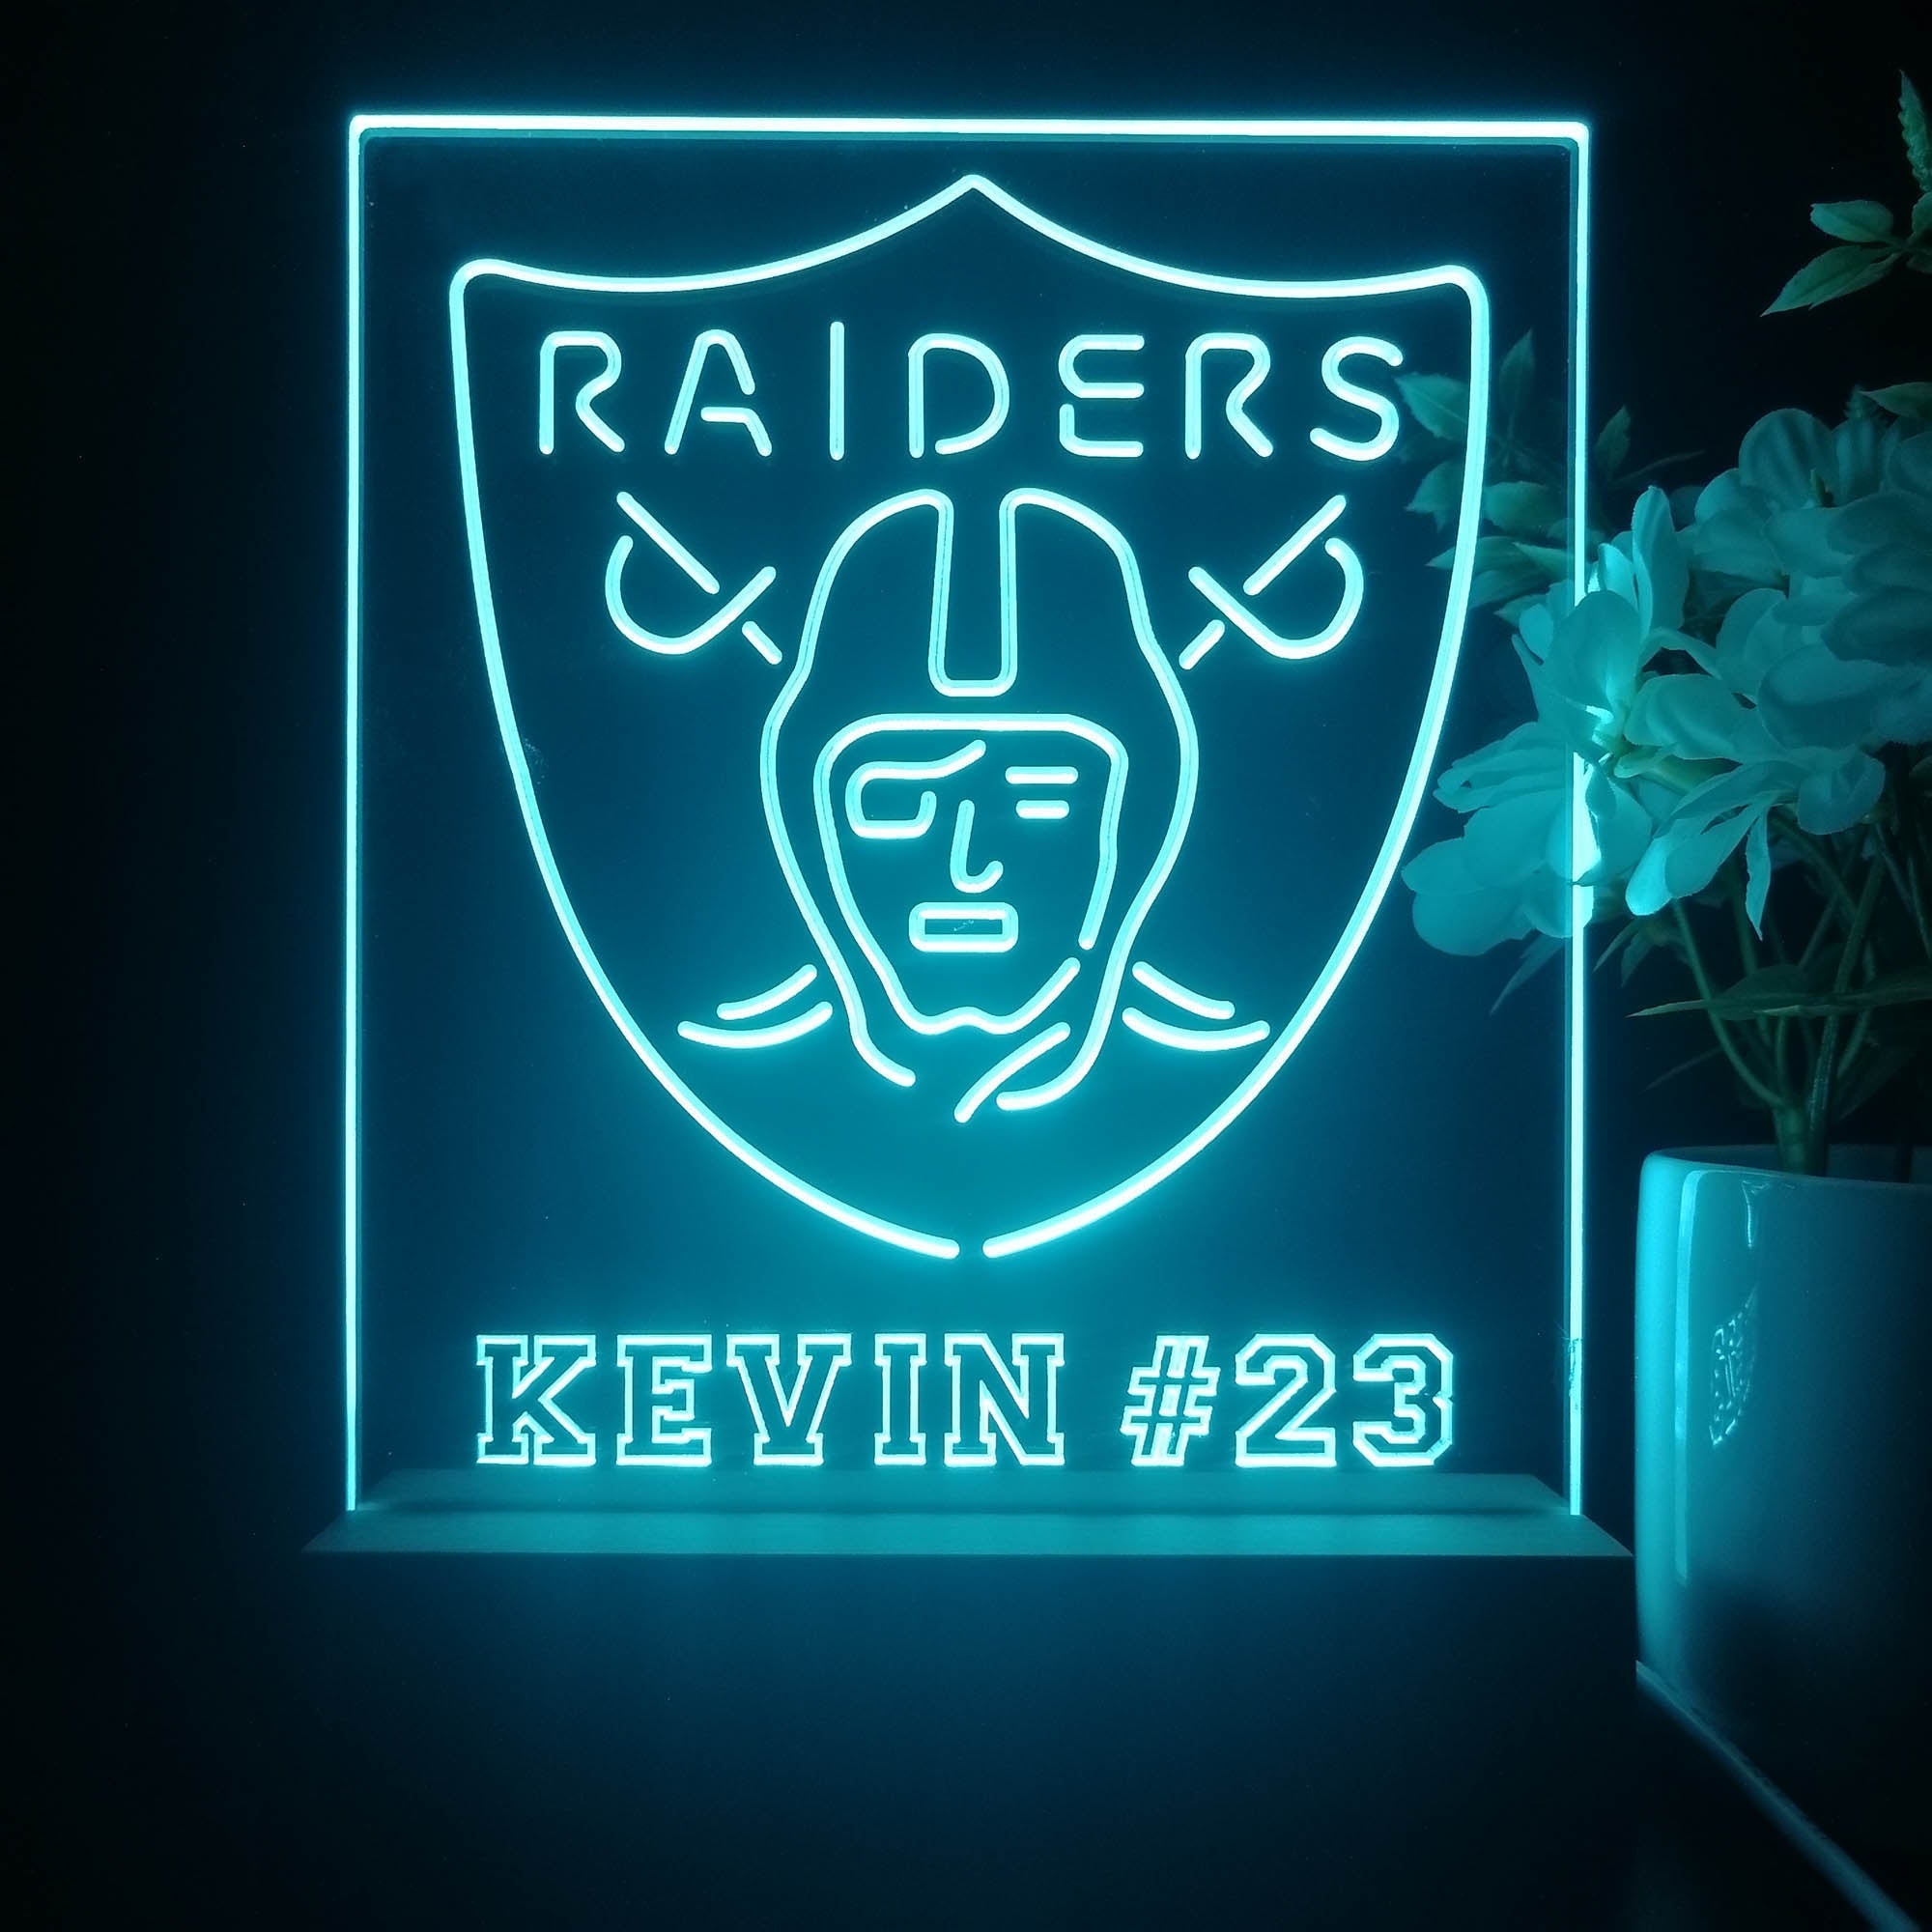 Personalized Las Vegas Raiders Souvenir Neon LED Night Light Sign